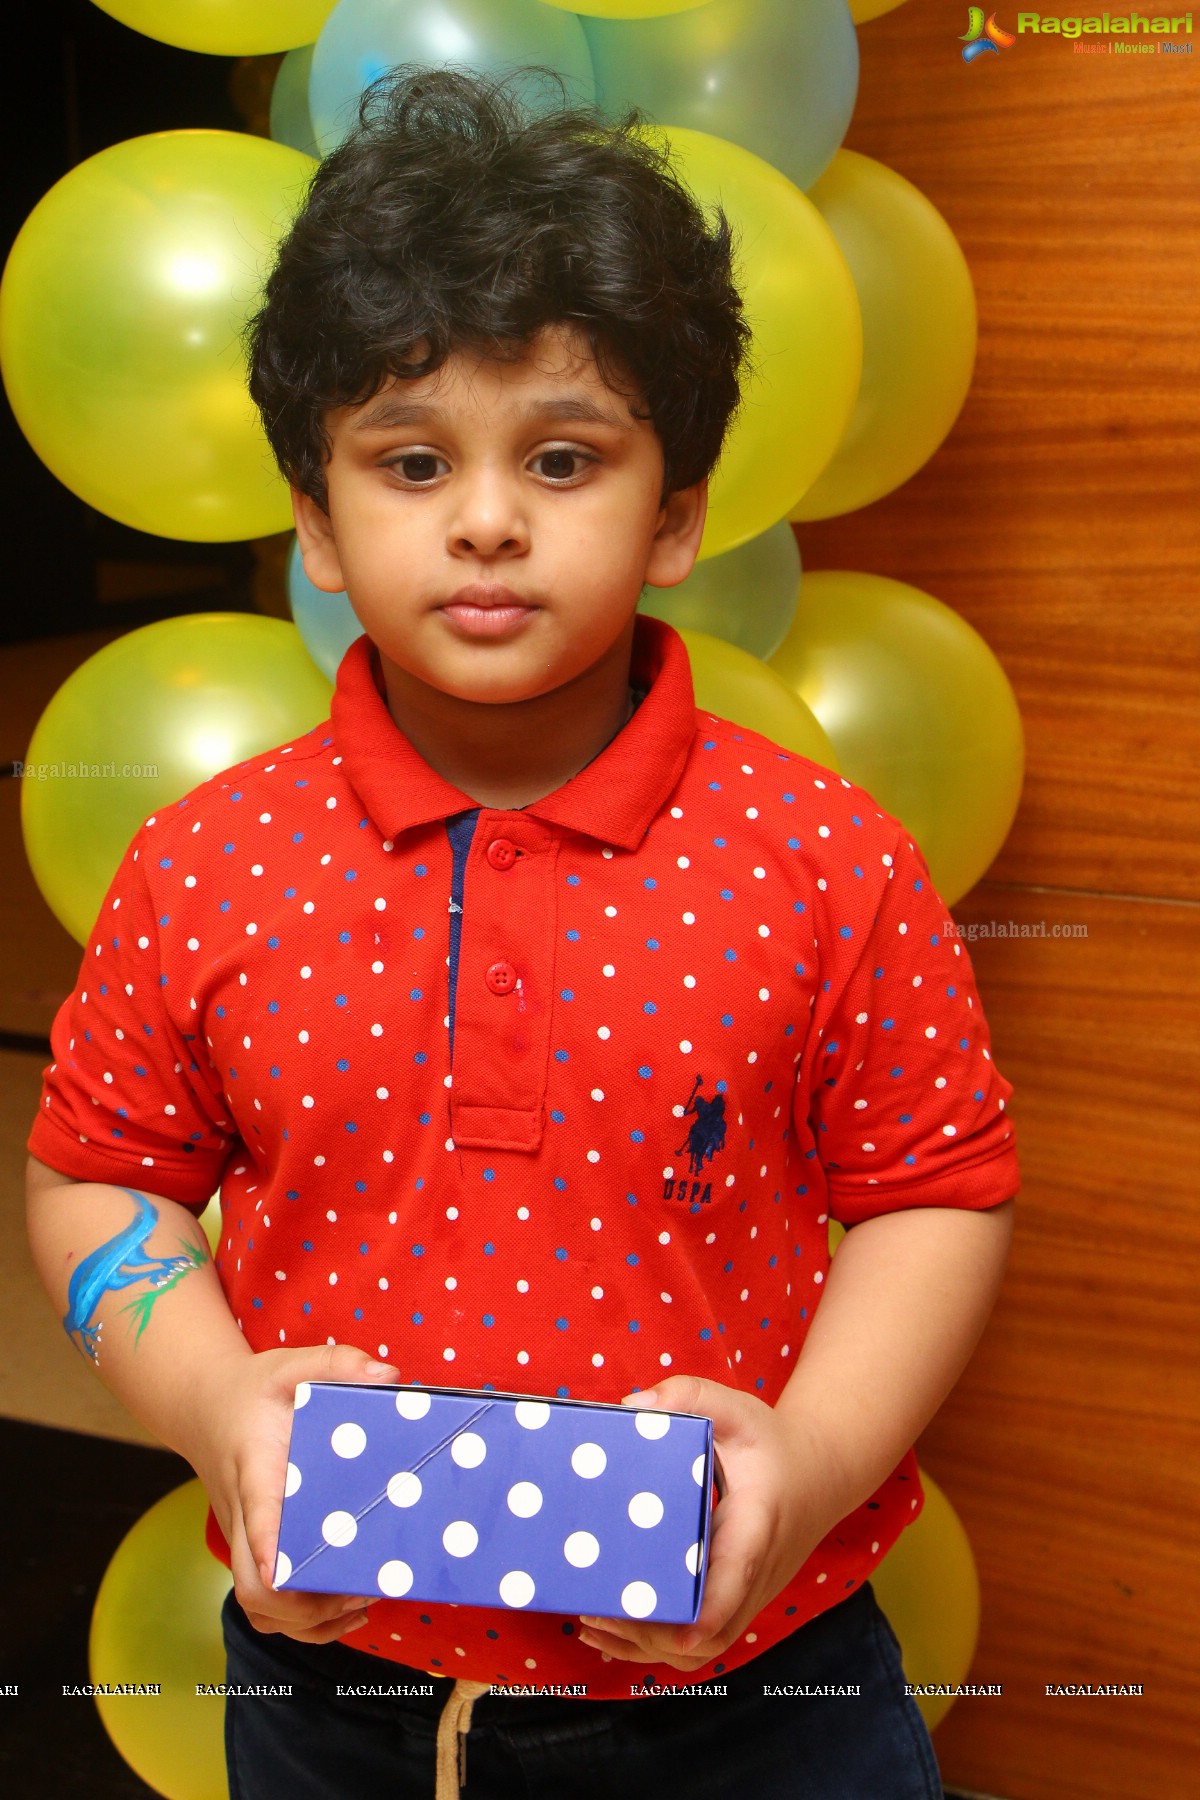 4th Birthday Celebrations of Krish (Grandson of Teegala Krishna Reddy) at Taj Deccan, Hyderabad